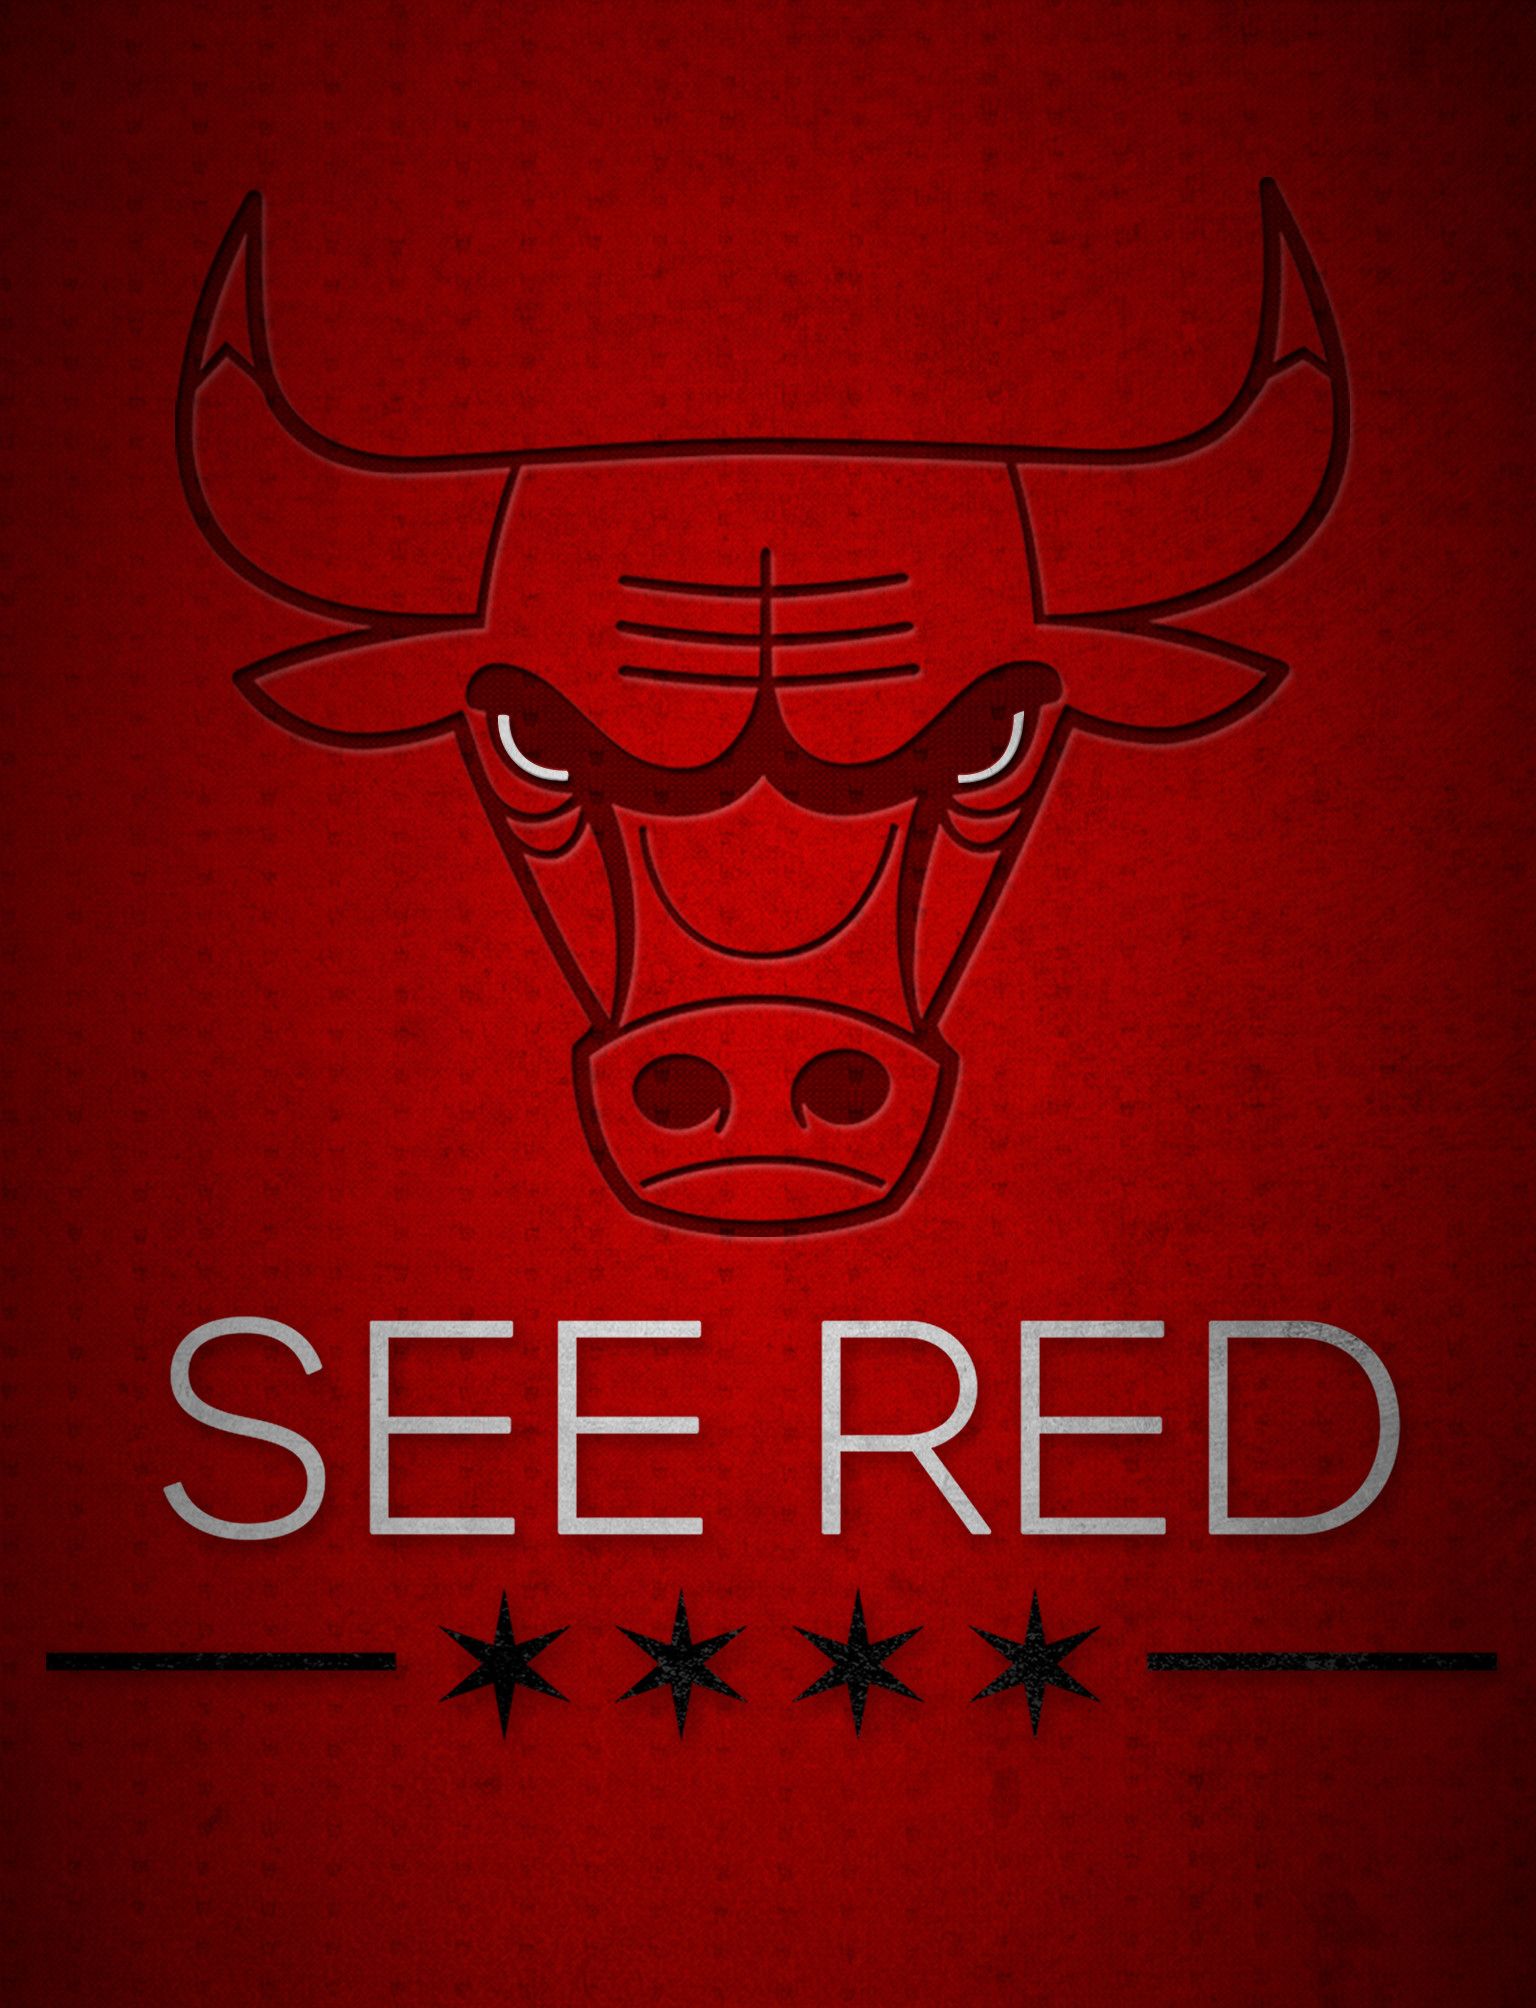 Chicago Bulls Logo Wallpaper